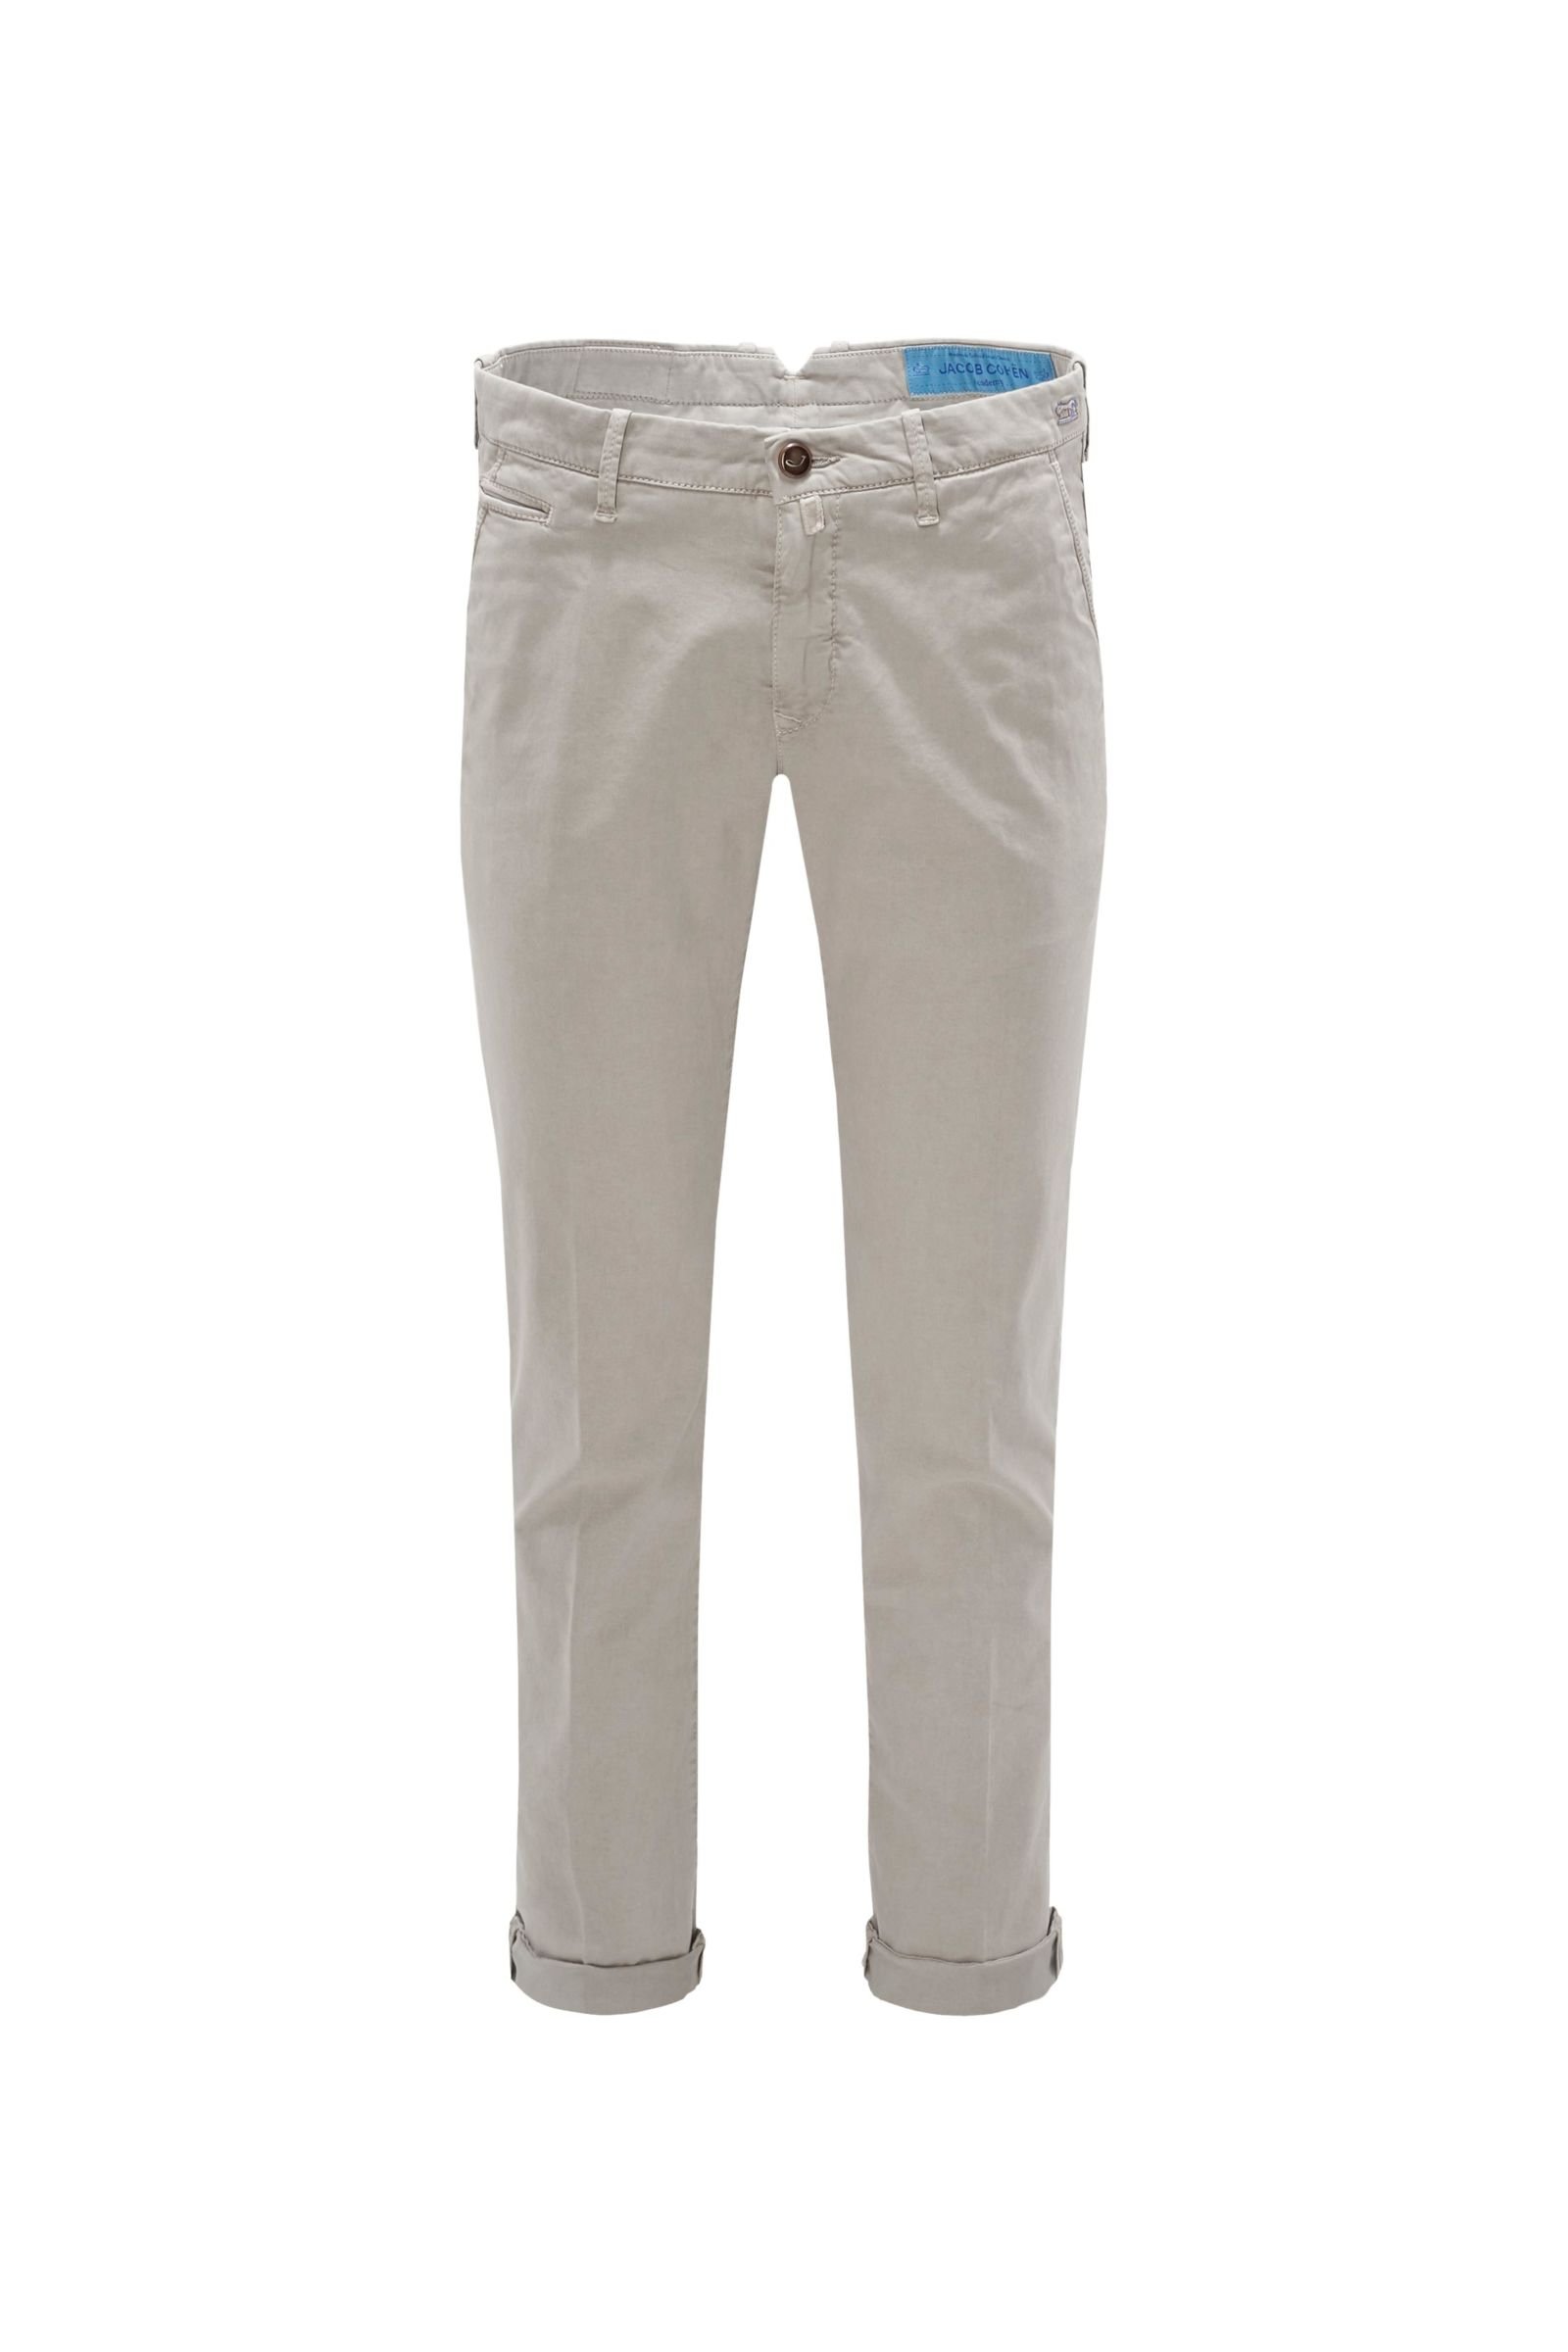 Cotton trousers 'B Comfort Slim Fit' beige